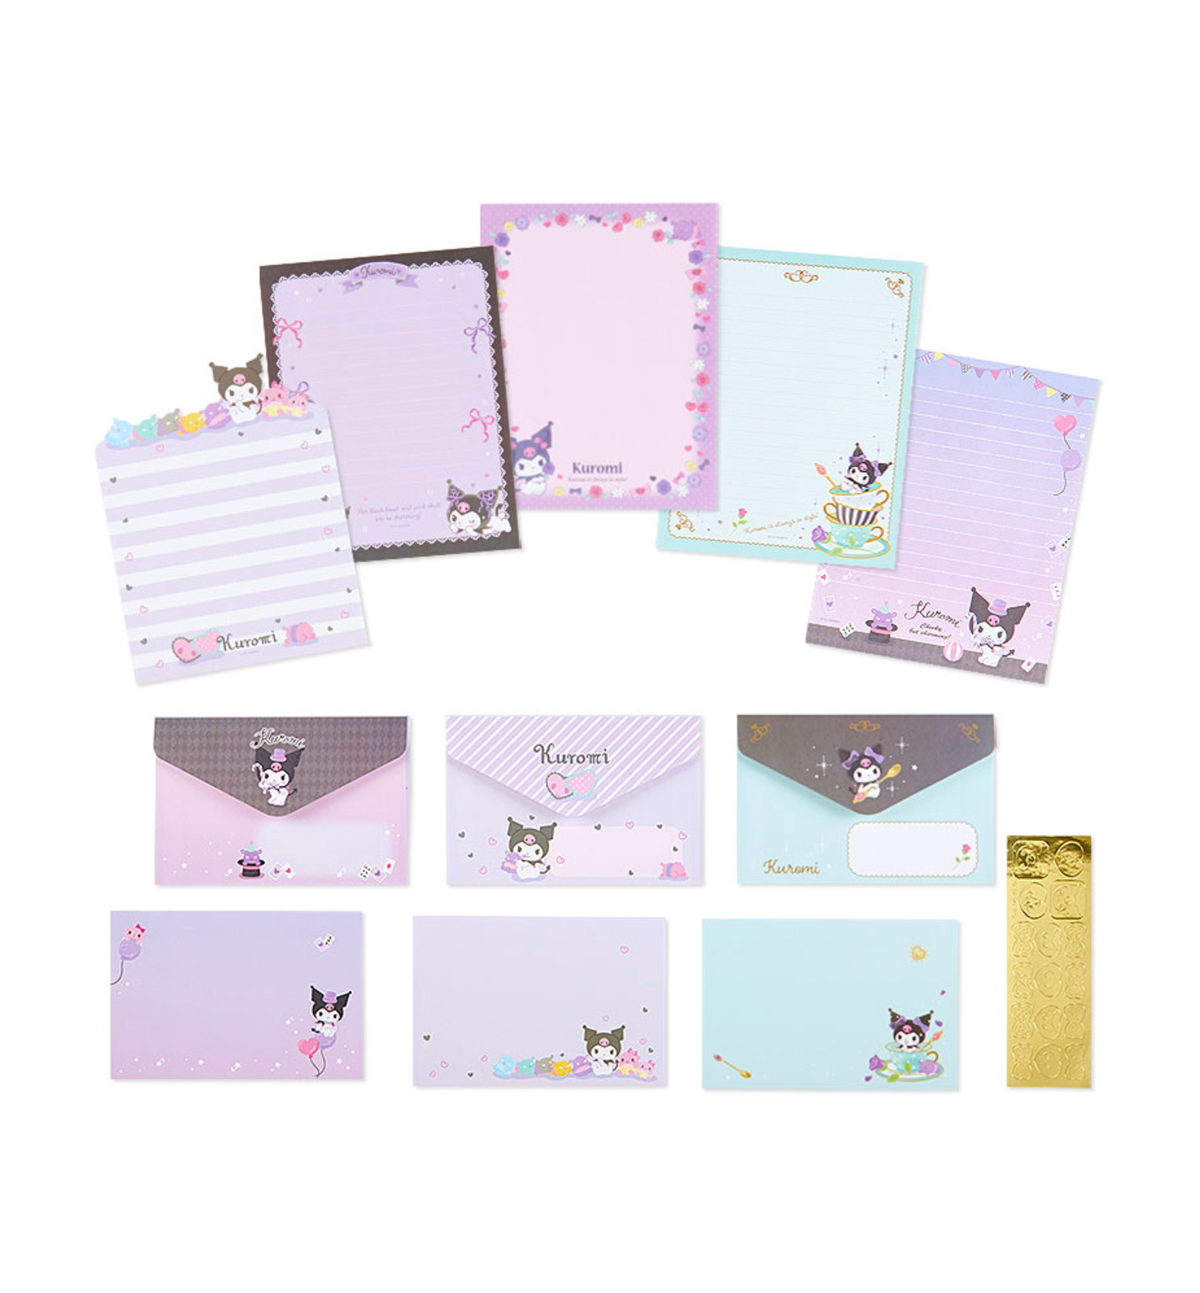 Sanrio Kuromi Letter Set [Side by Side]